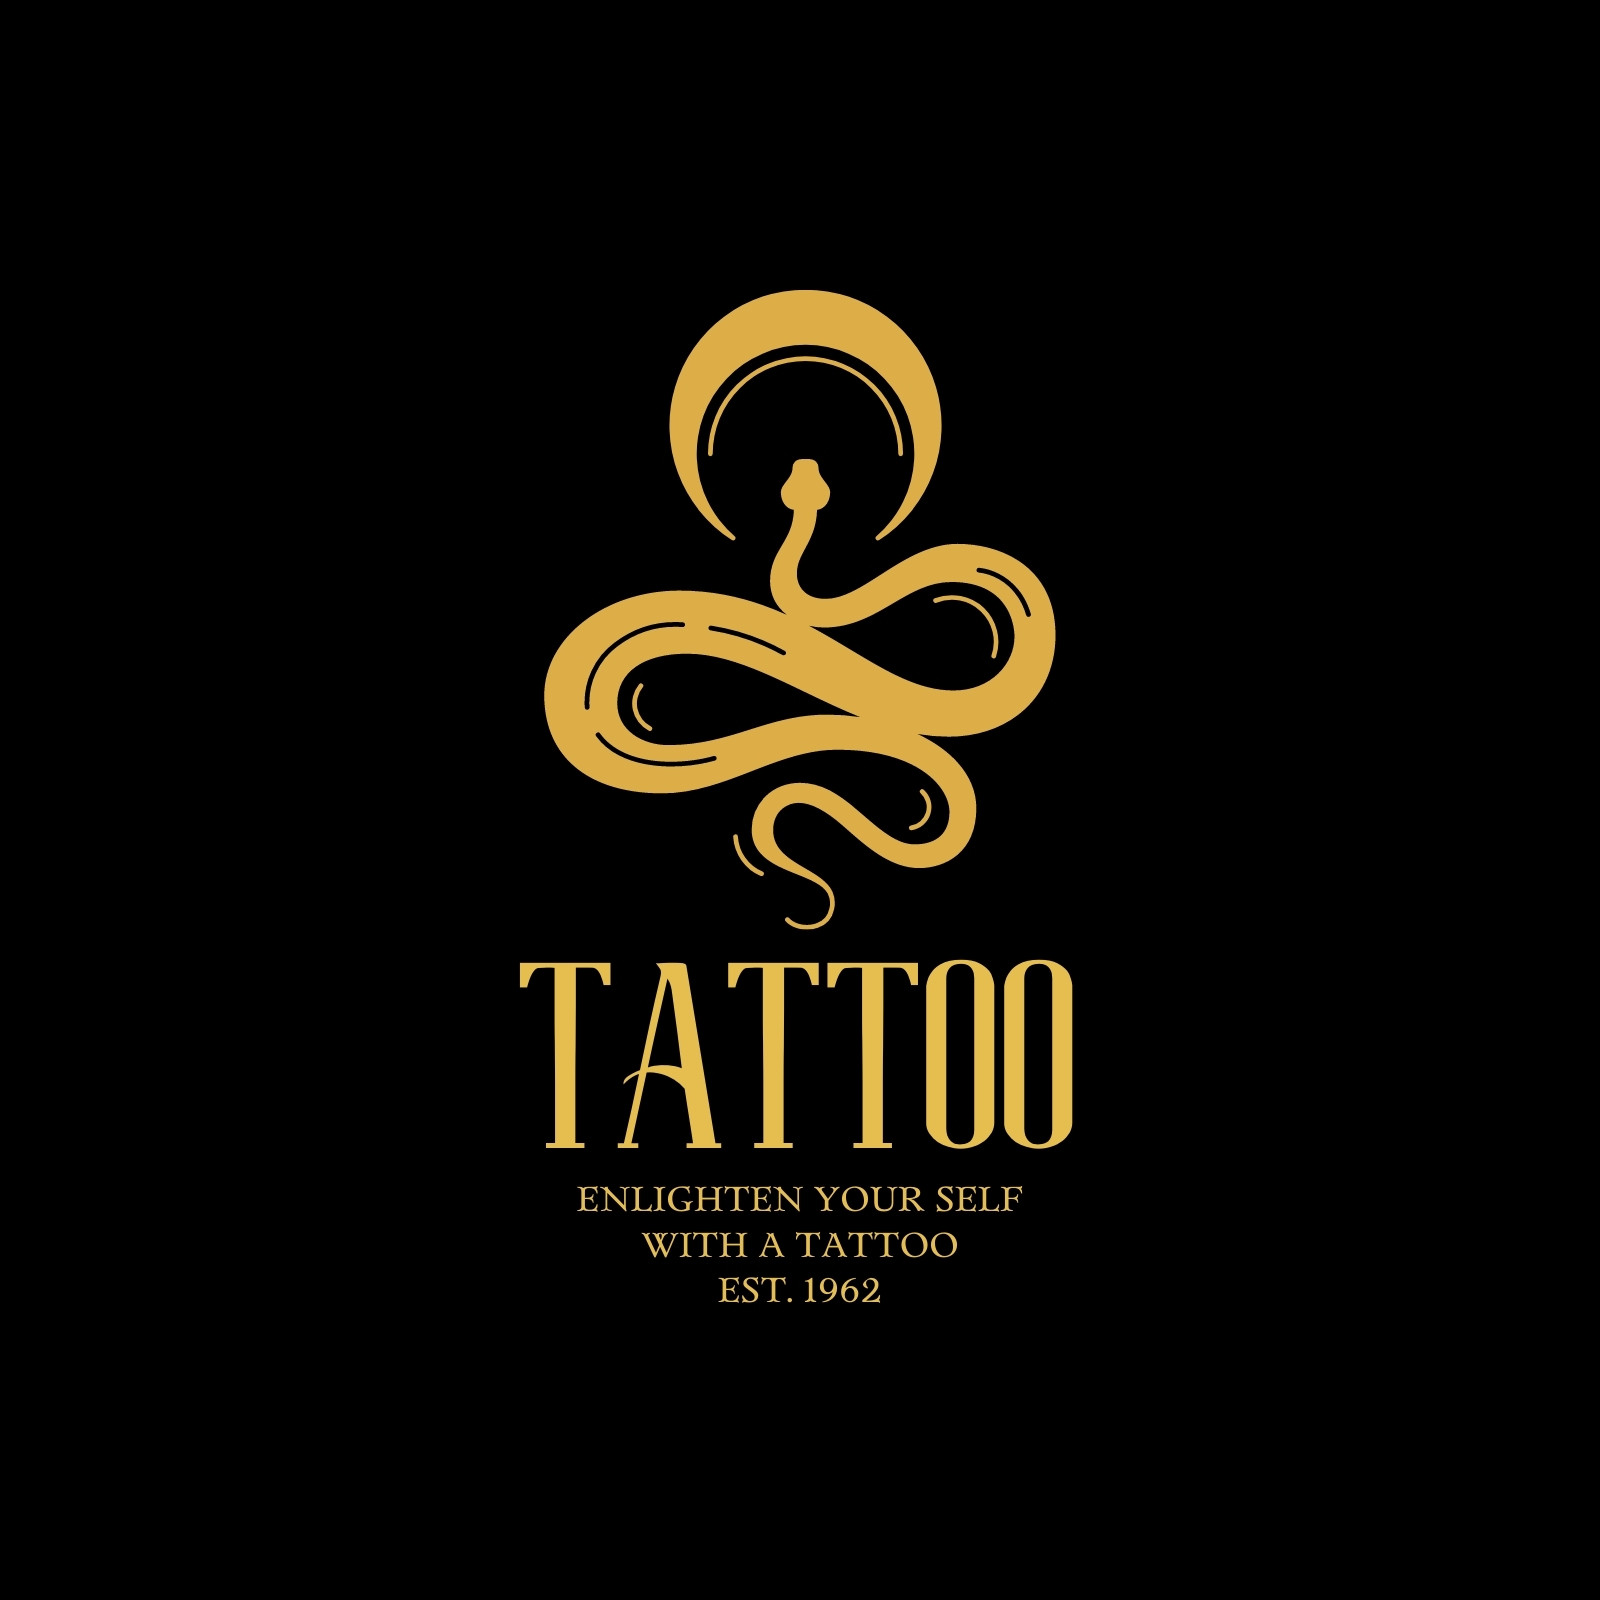 Design for tattoo studios and artist tattoo logo by Alian_abdullah | Fiverr